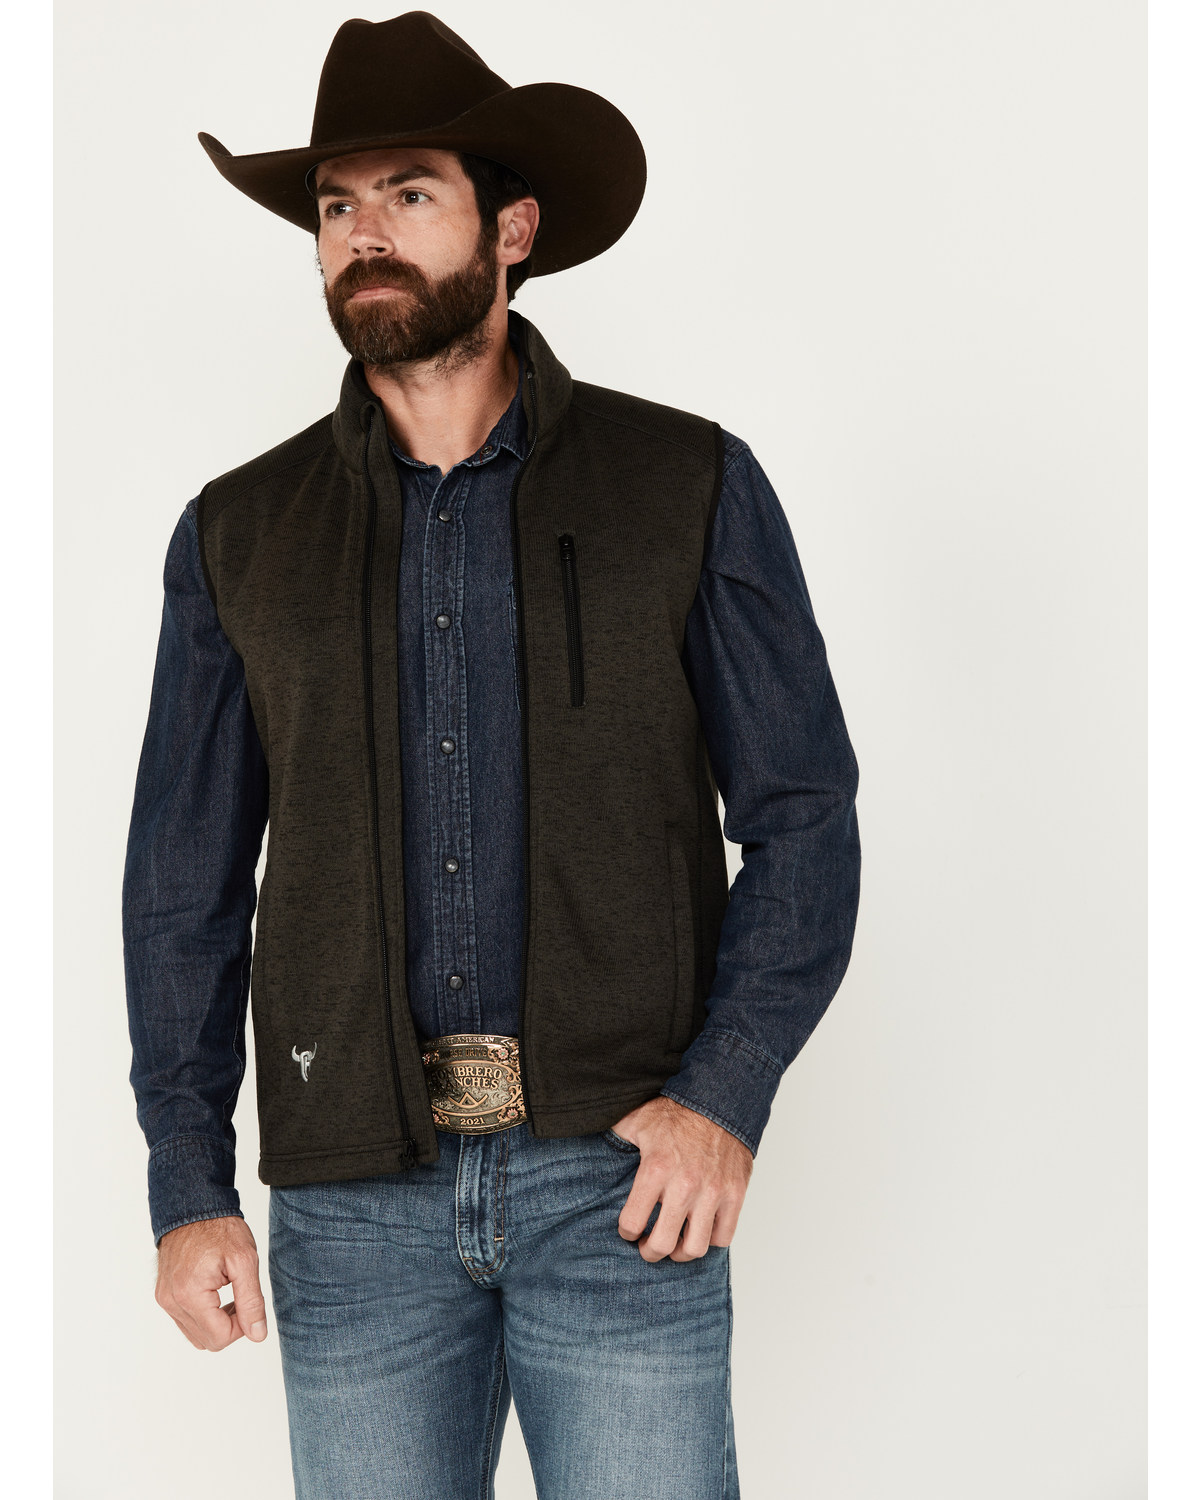 Cowboy Hardware Men's Speckle Knit Vest